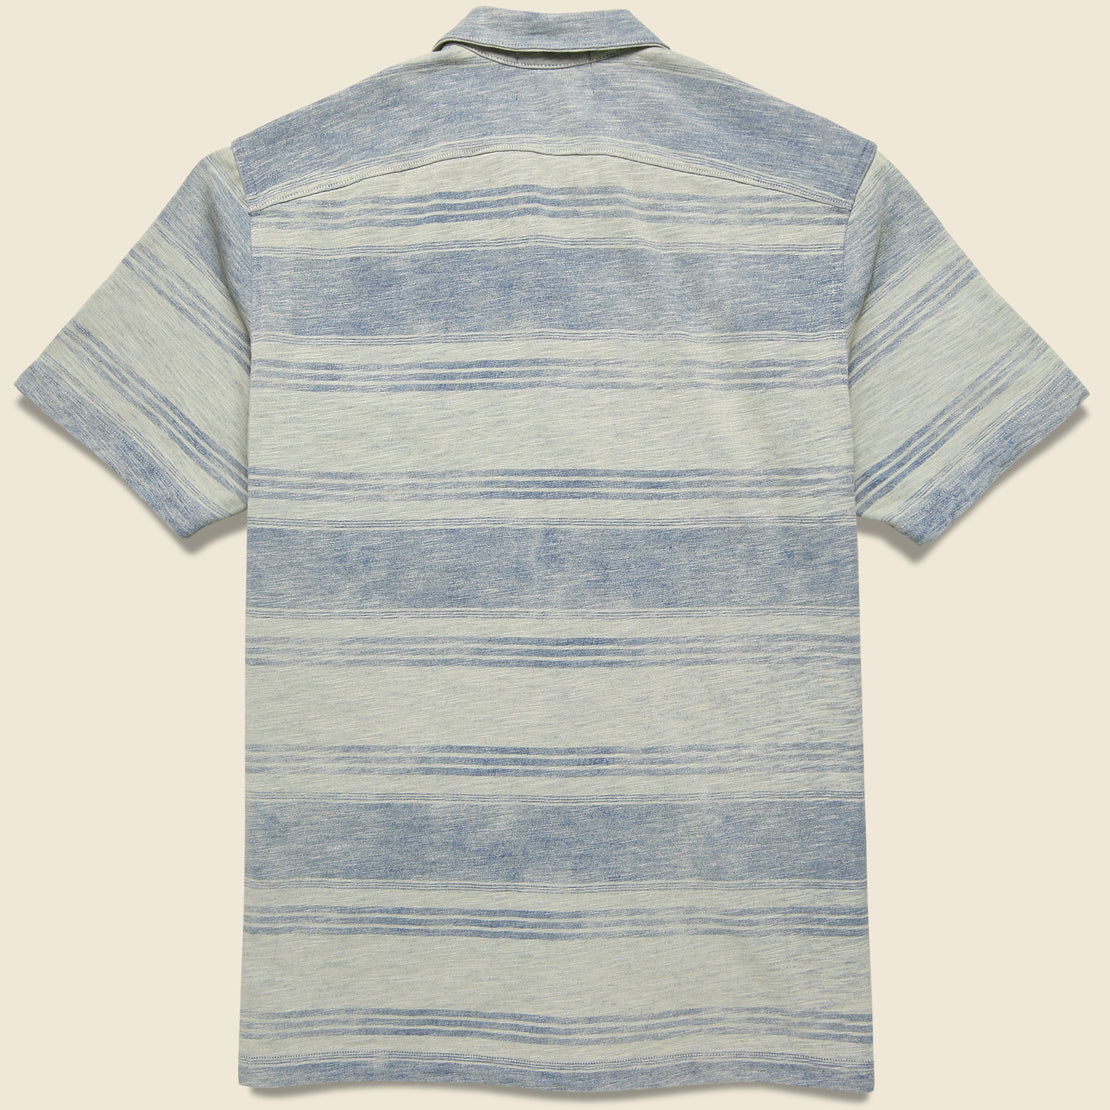 3 Pocket Jersey Camp Shirt - Indigo/Cream Stripe